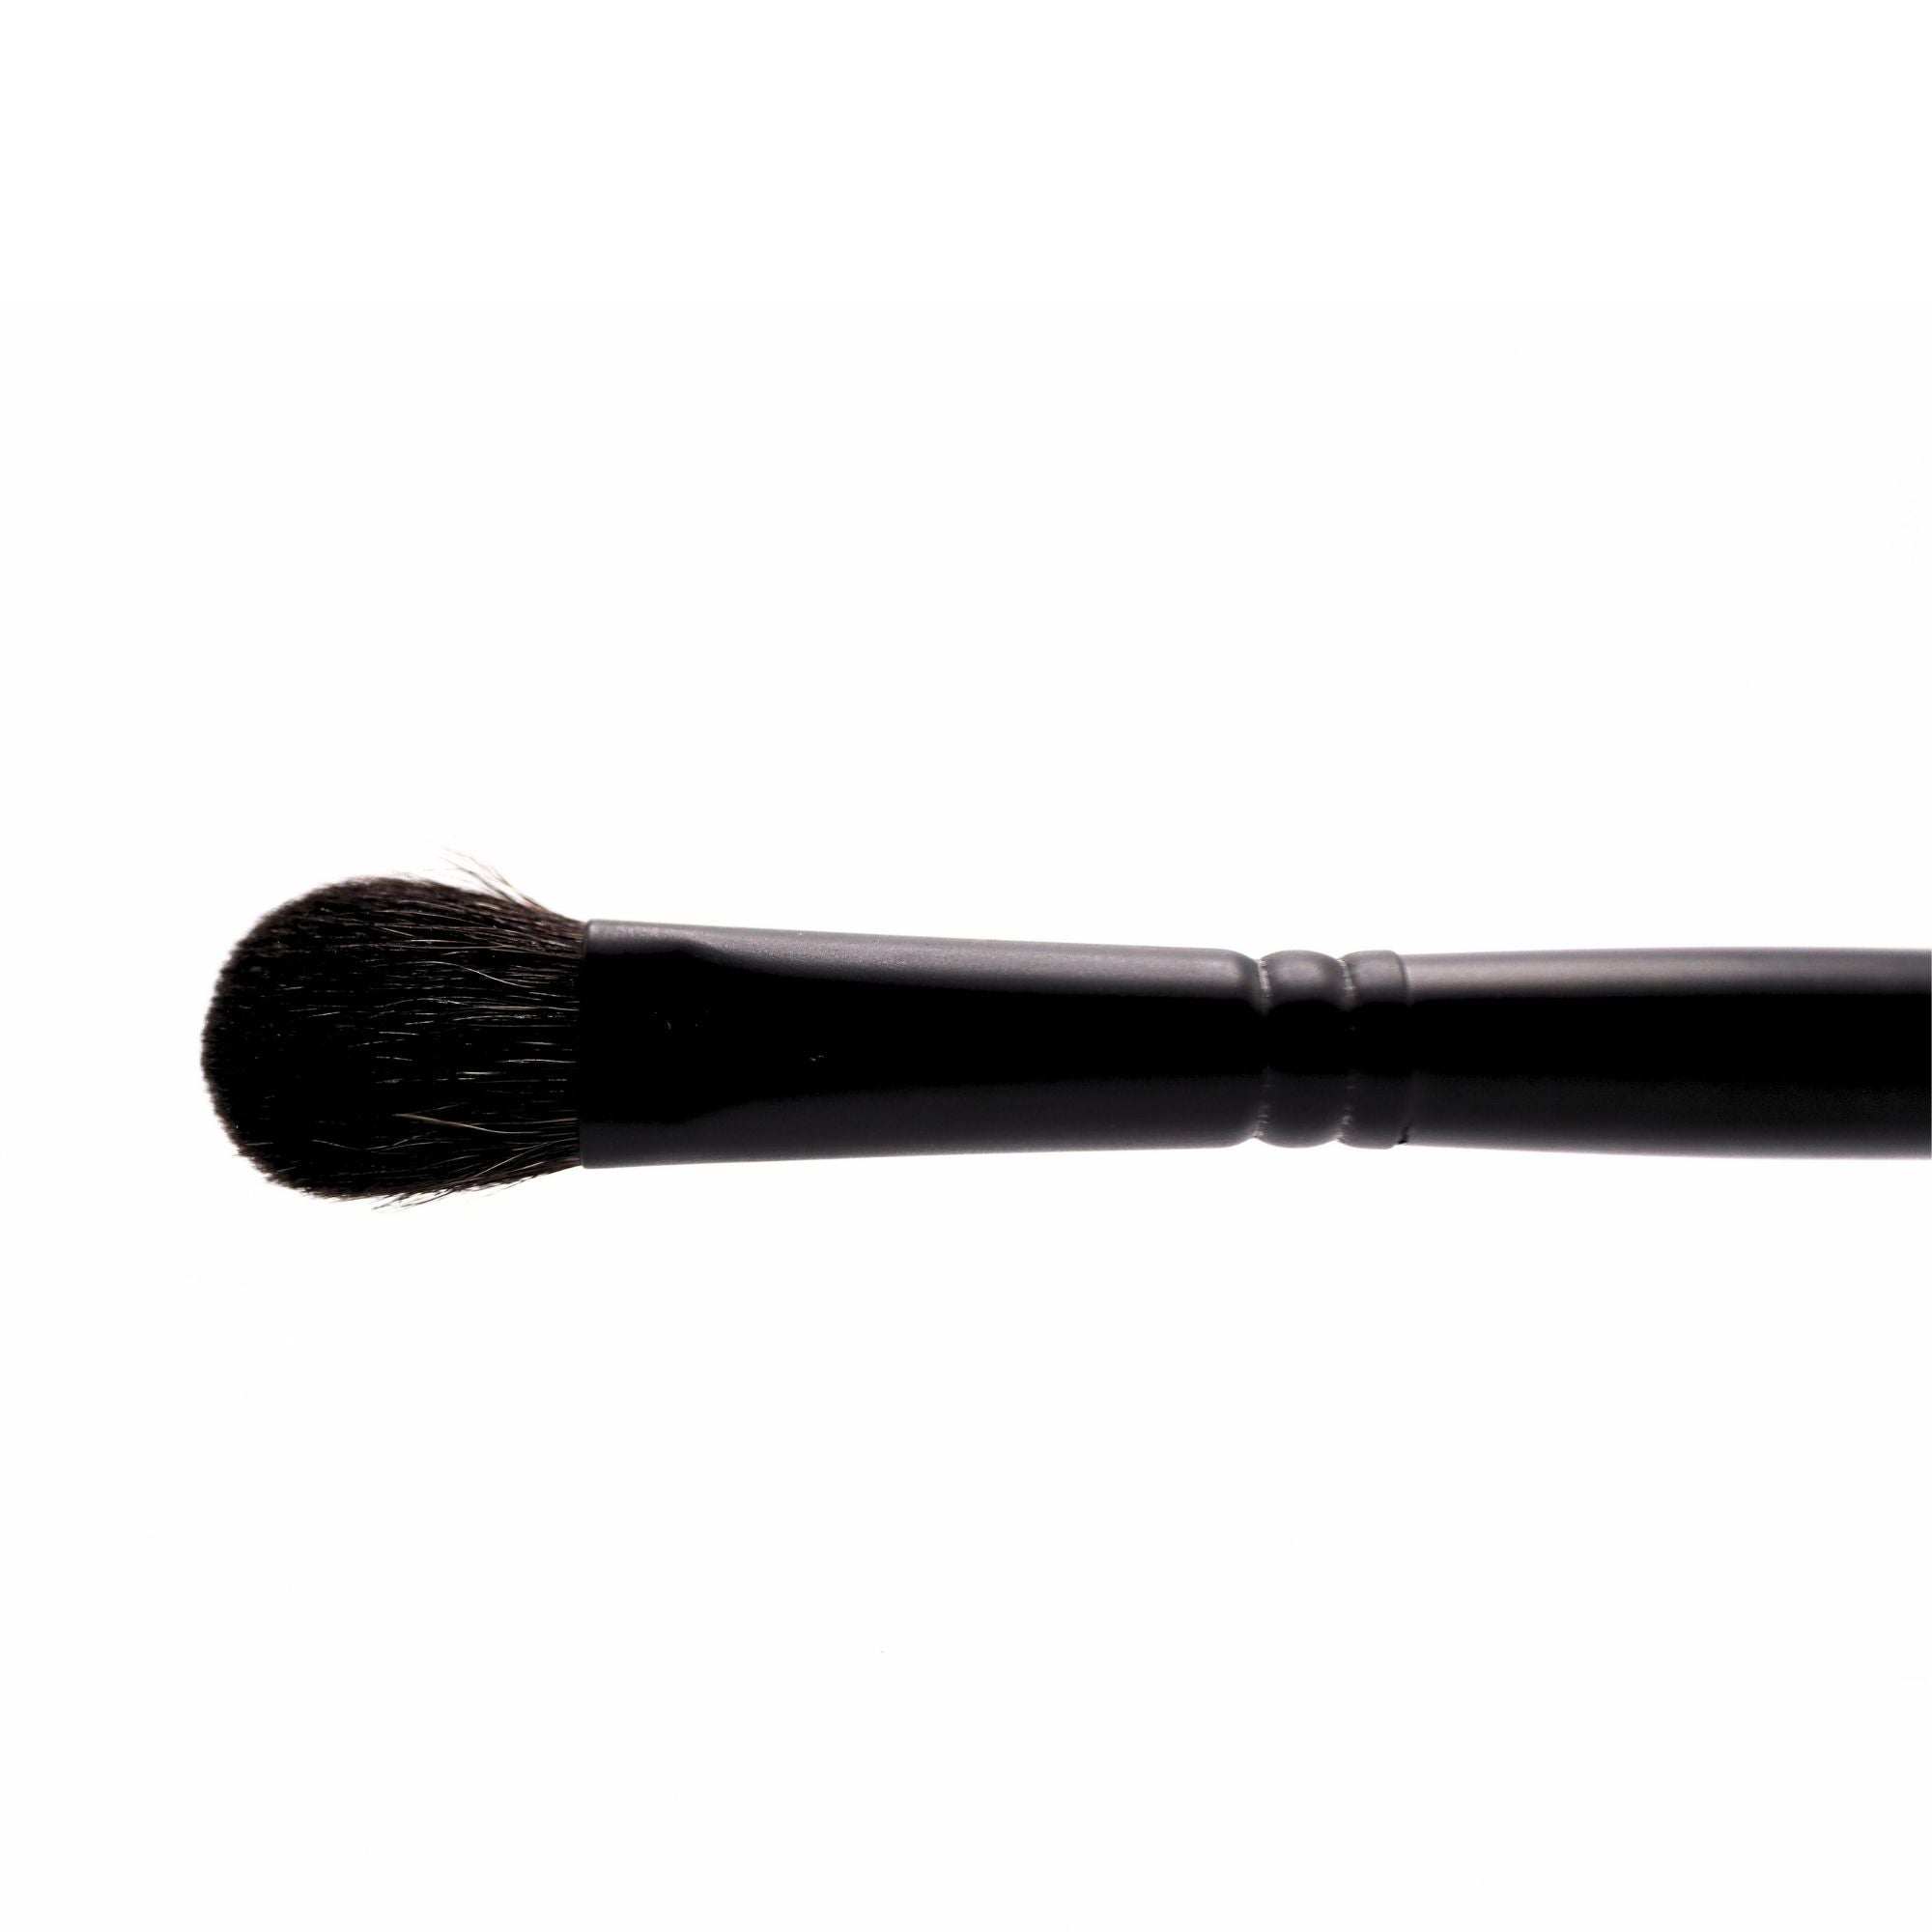 Tauhaus P-07 Large Eyeshadow Brush, Pro Series - Fude Beauty, Japanese Makeup Brushes